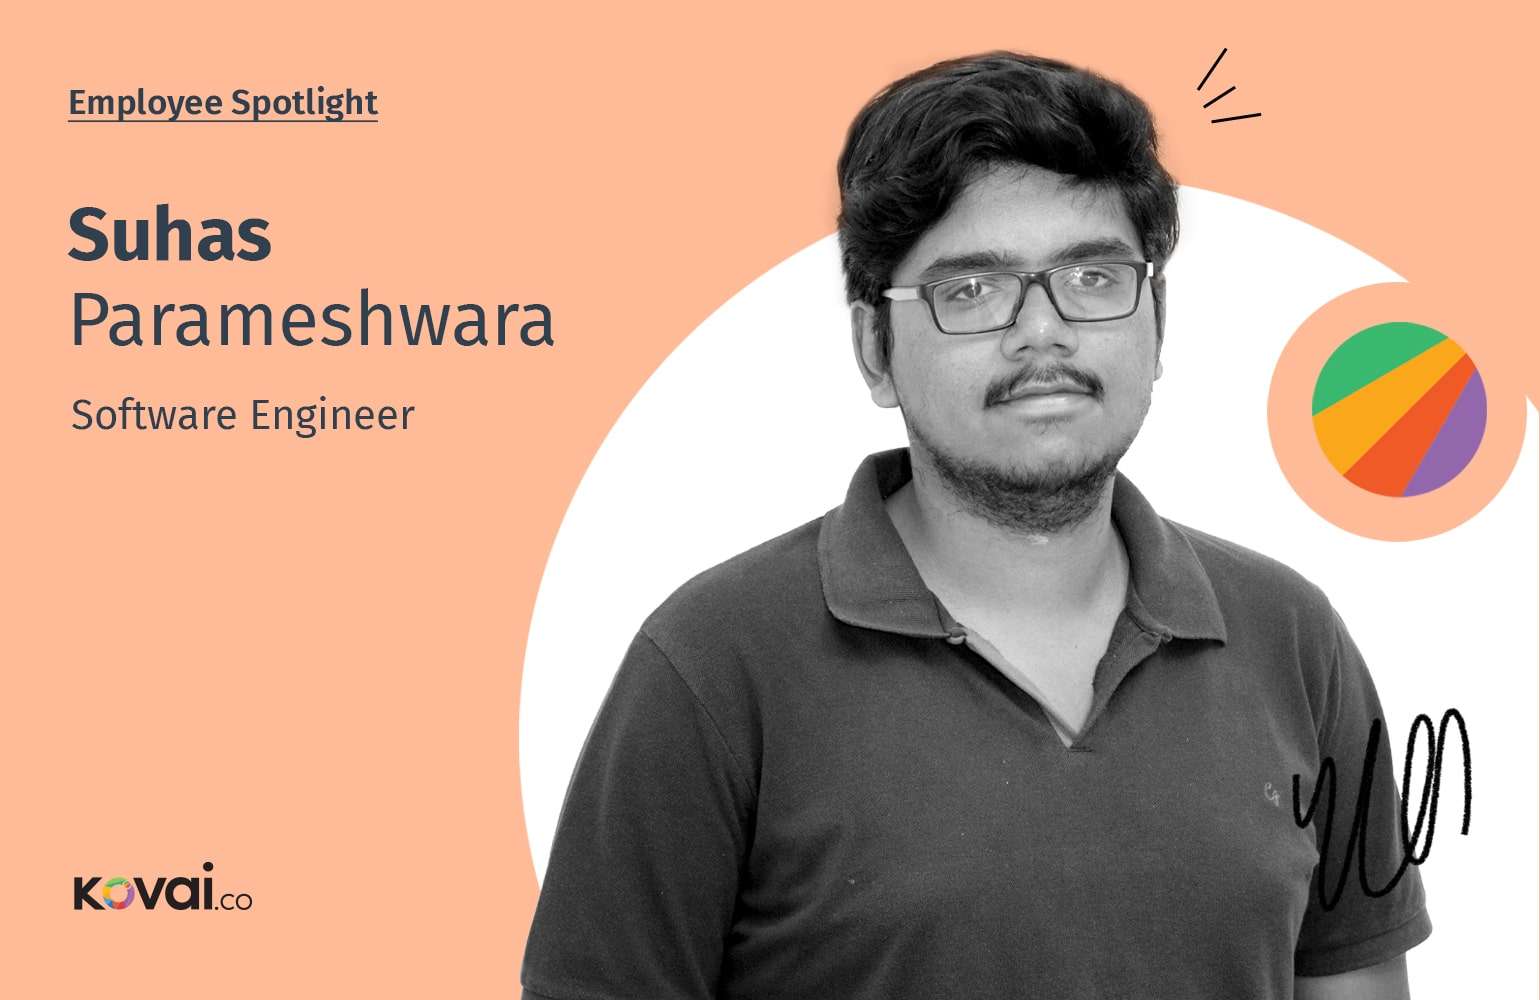 Suhas Parameshwara: Employee Spotlight